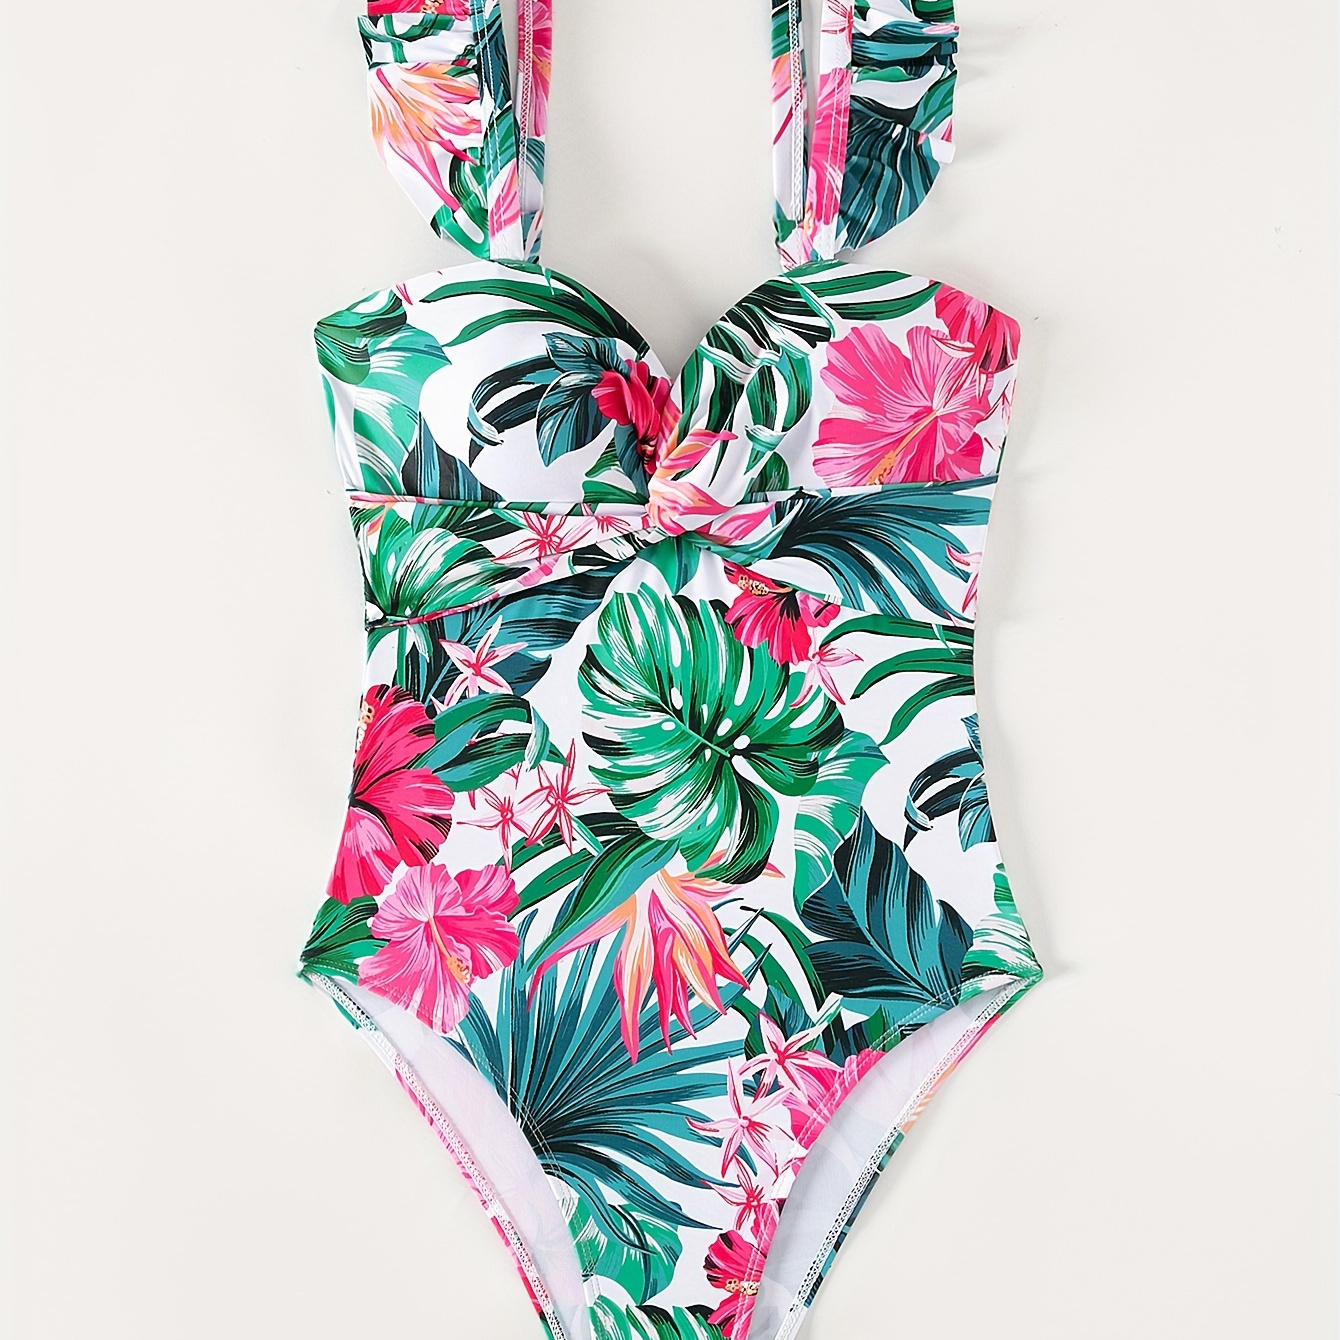 

Tropical Floral Leaf Print Ruffle Trim Swimsuit, Twist High Cut Stretchy V Neck Bathing Suit, Women's Swimwear & Clothing